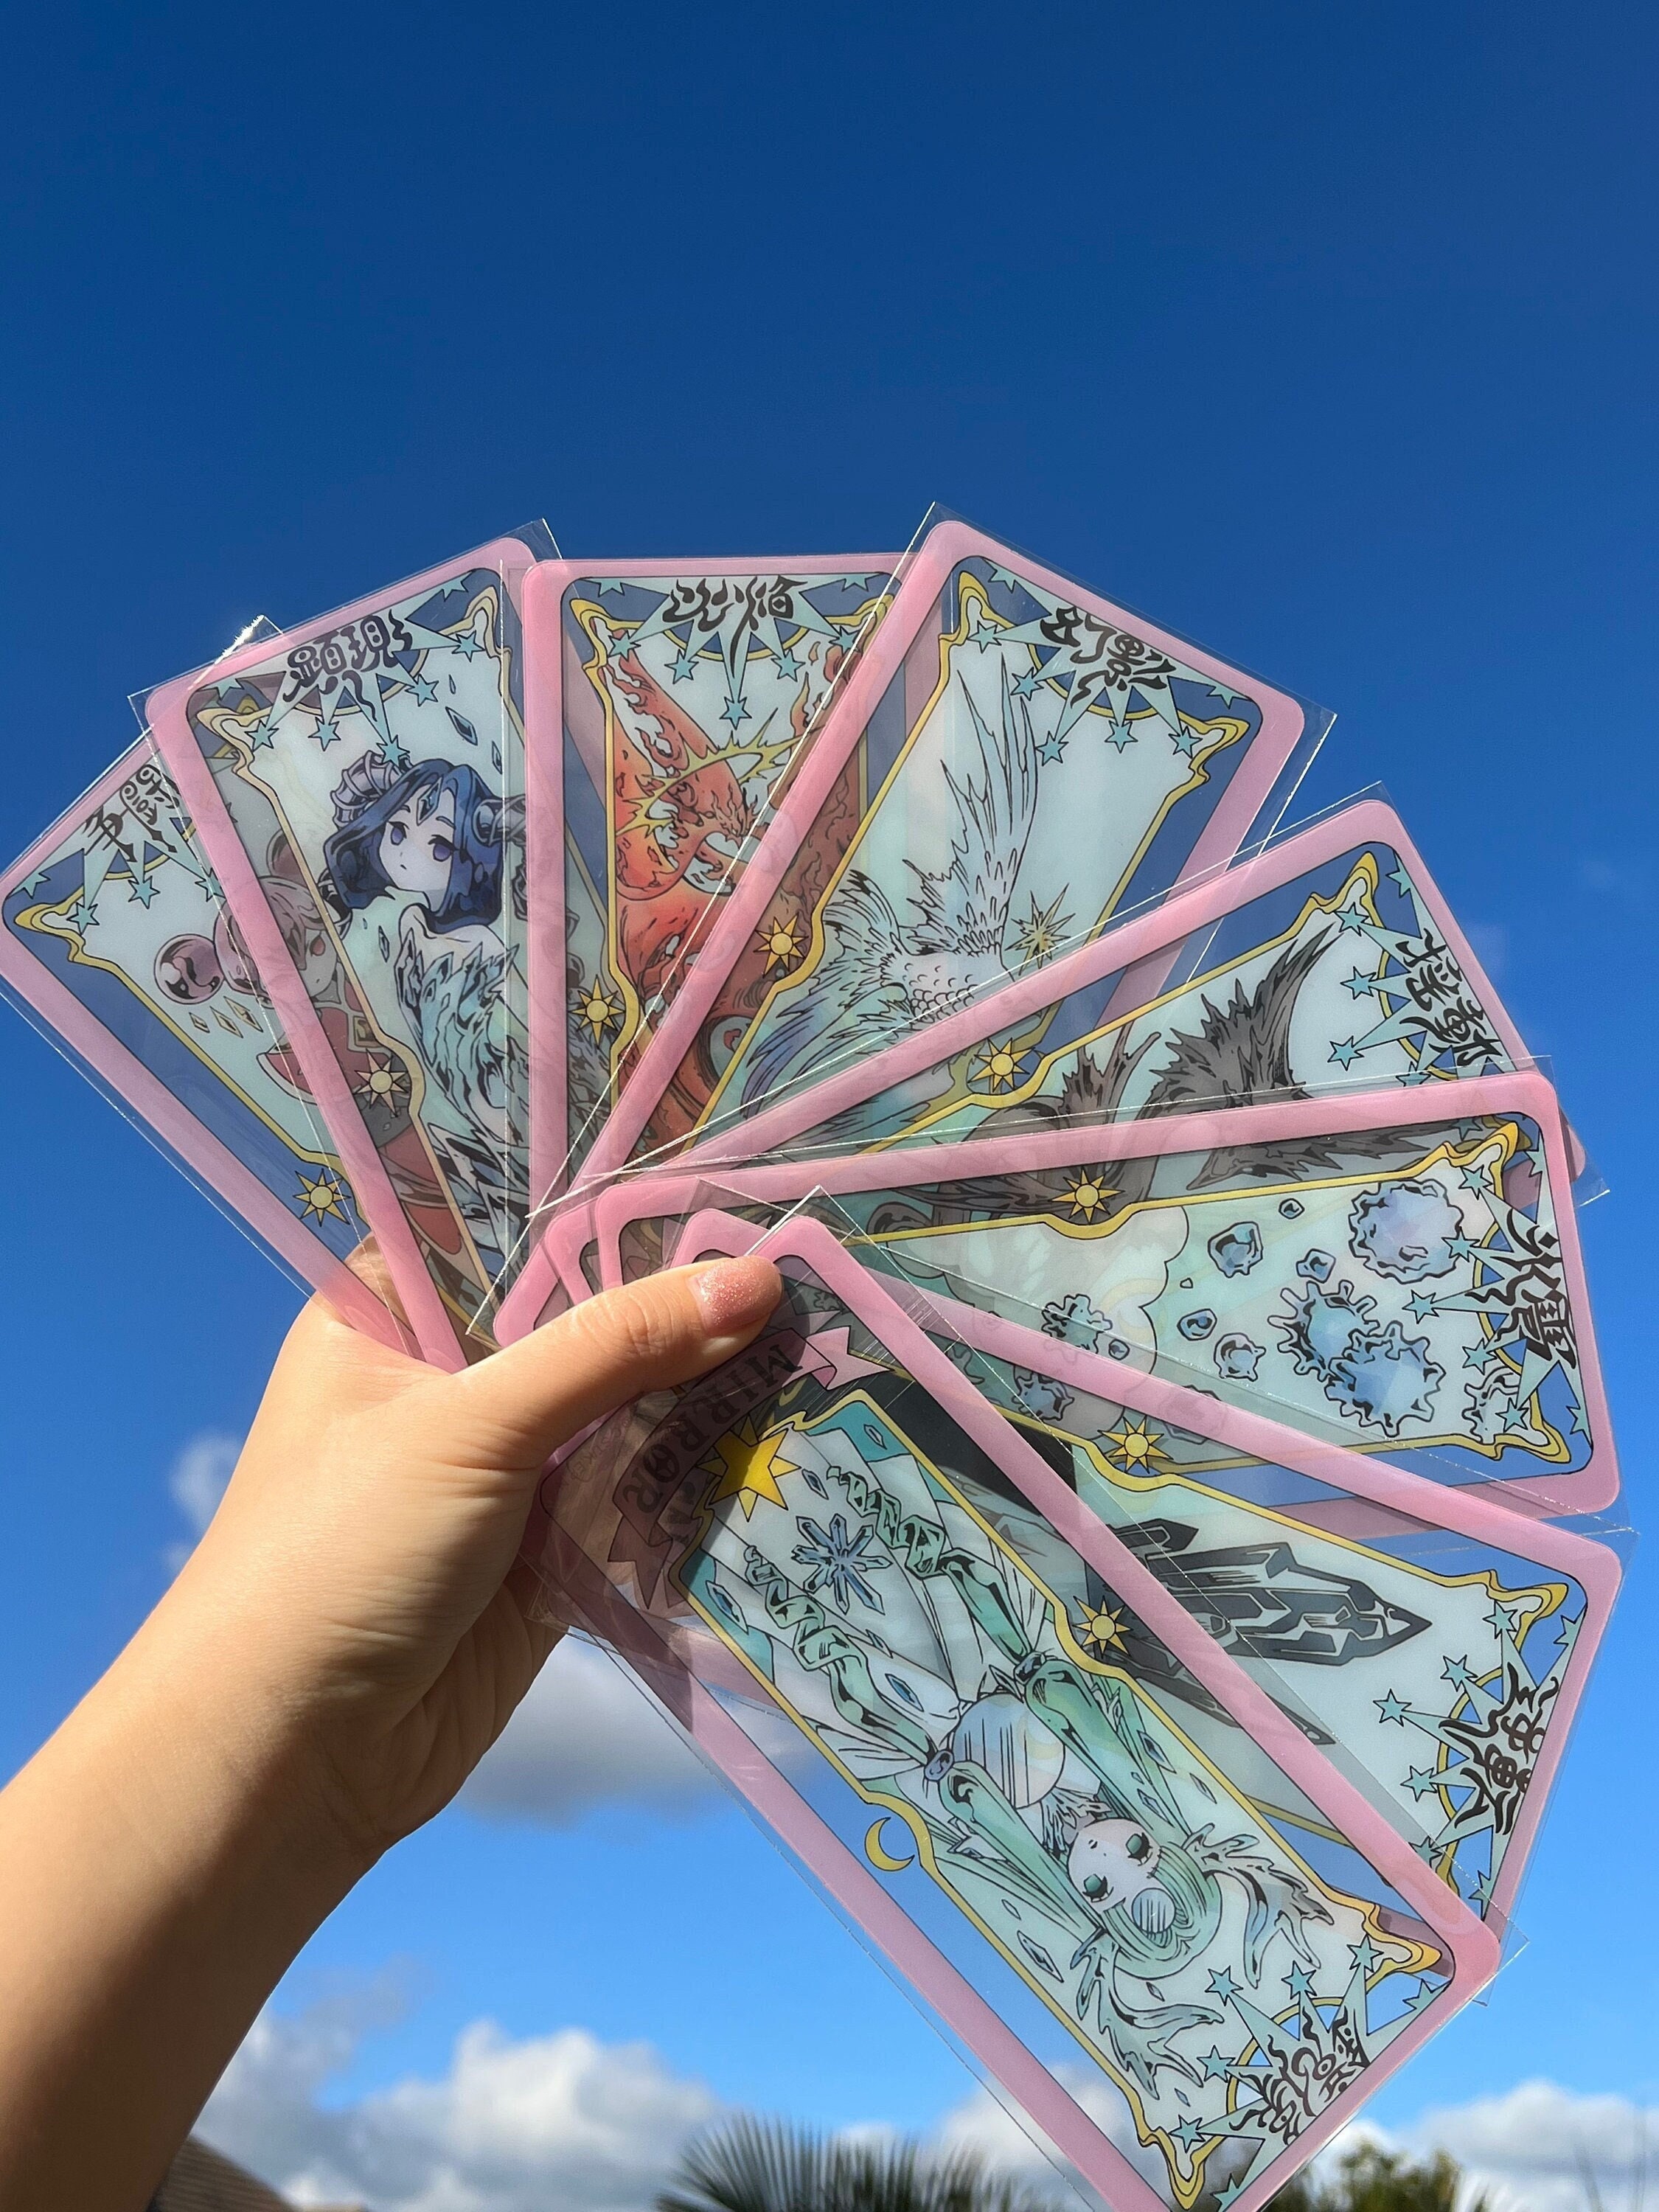 Cardcaptor Sakura: Clear Card Snow Globe